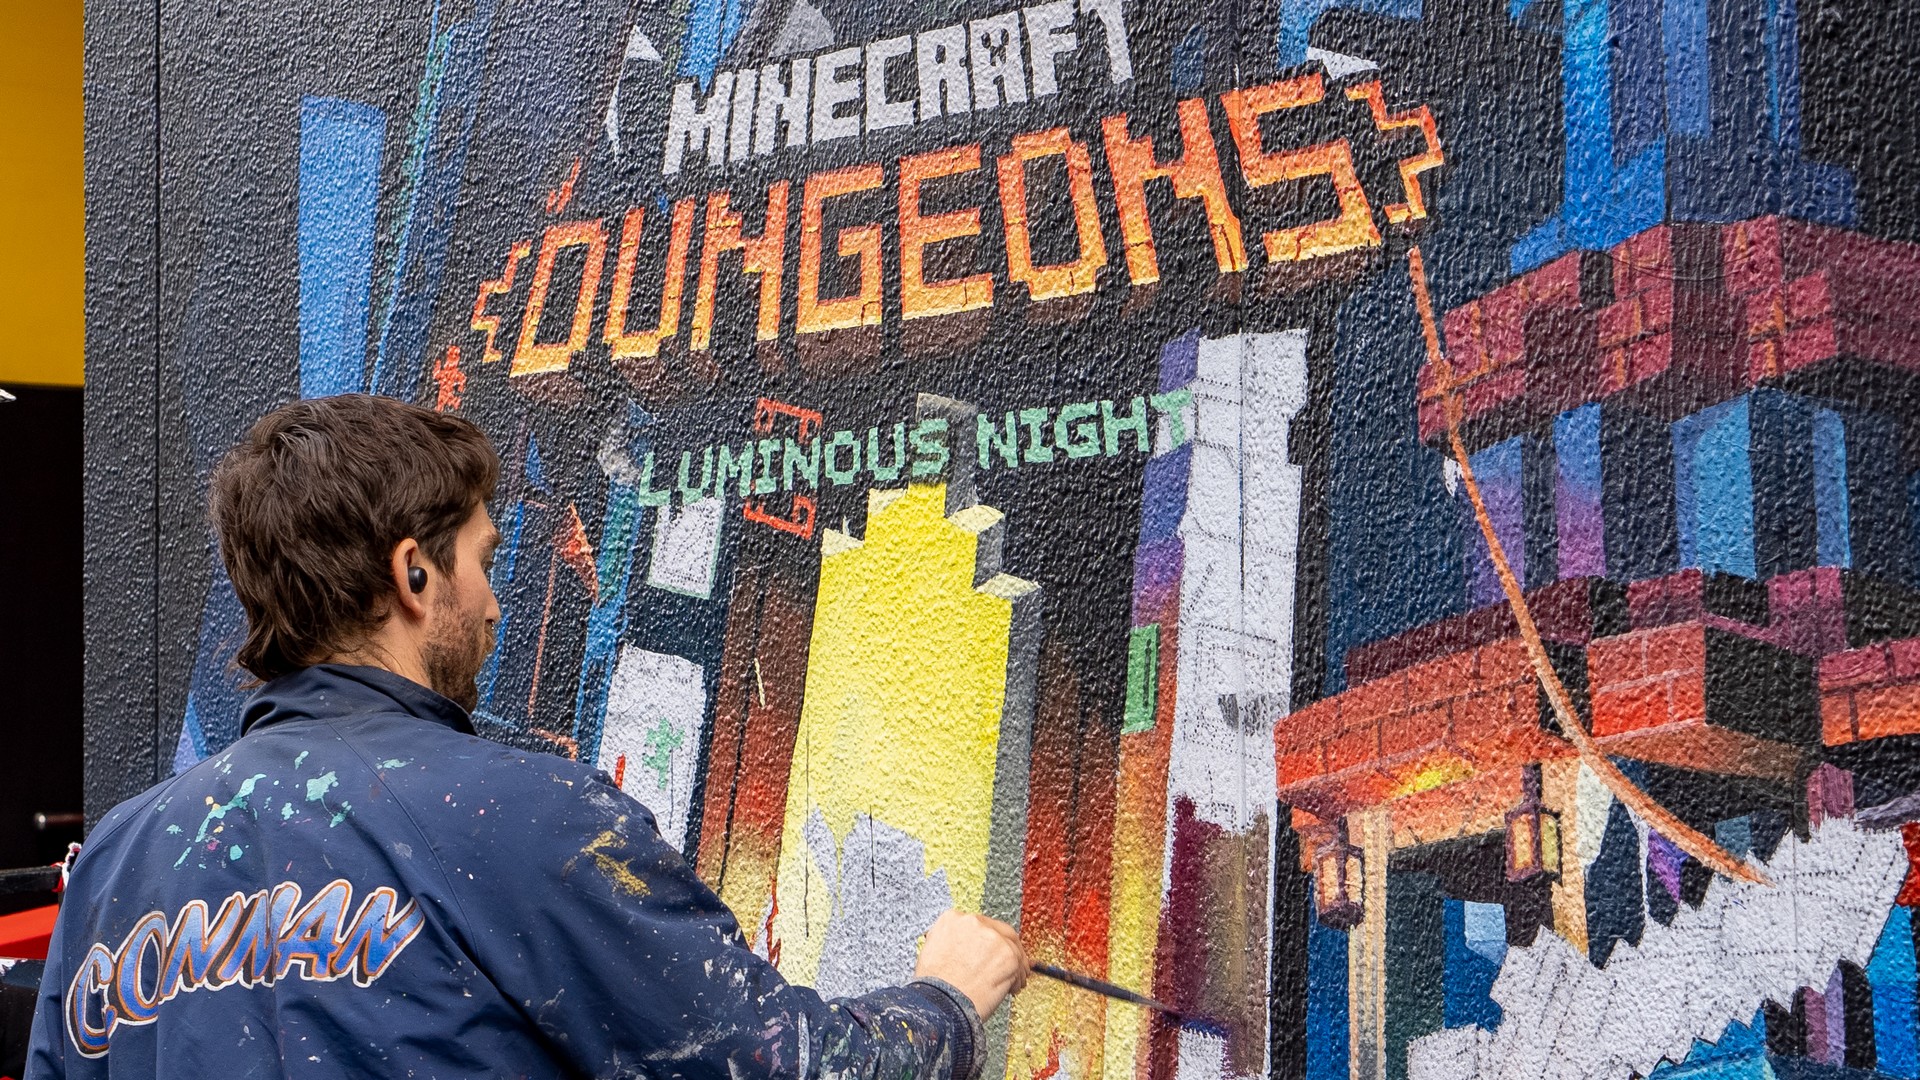 Minecraft Dungeons: Luminous Night Has Taken Over Melbourne